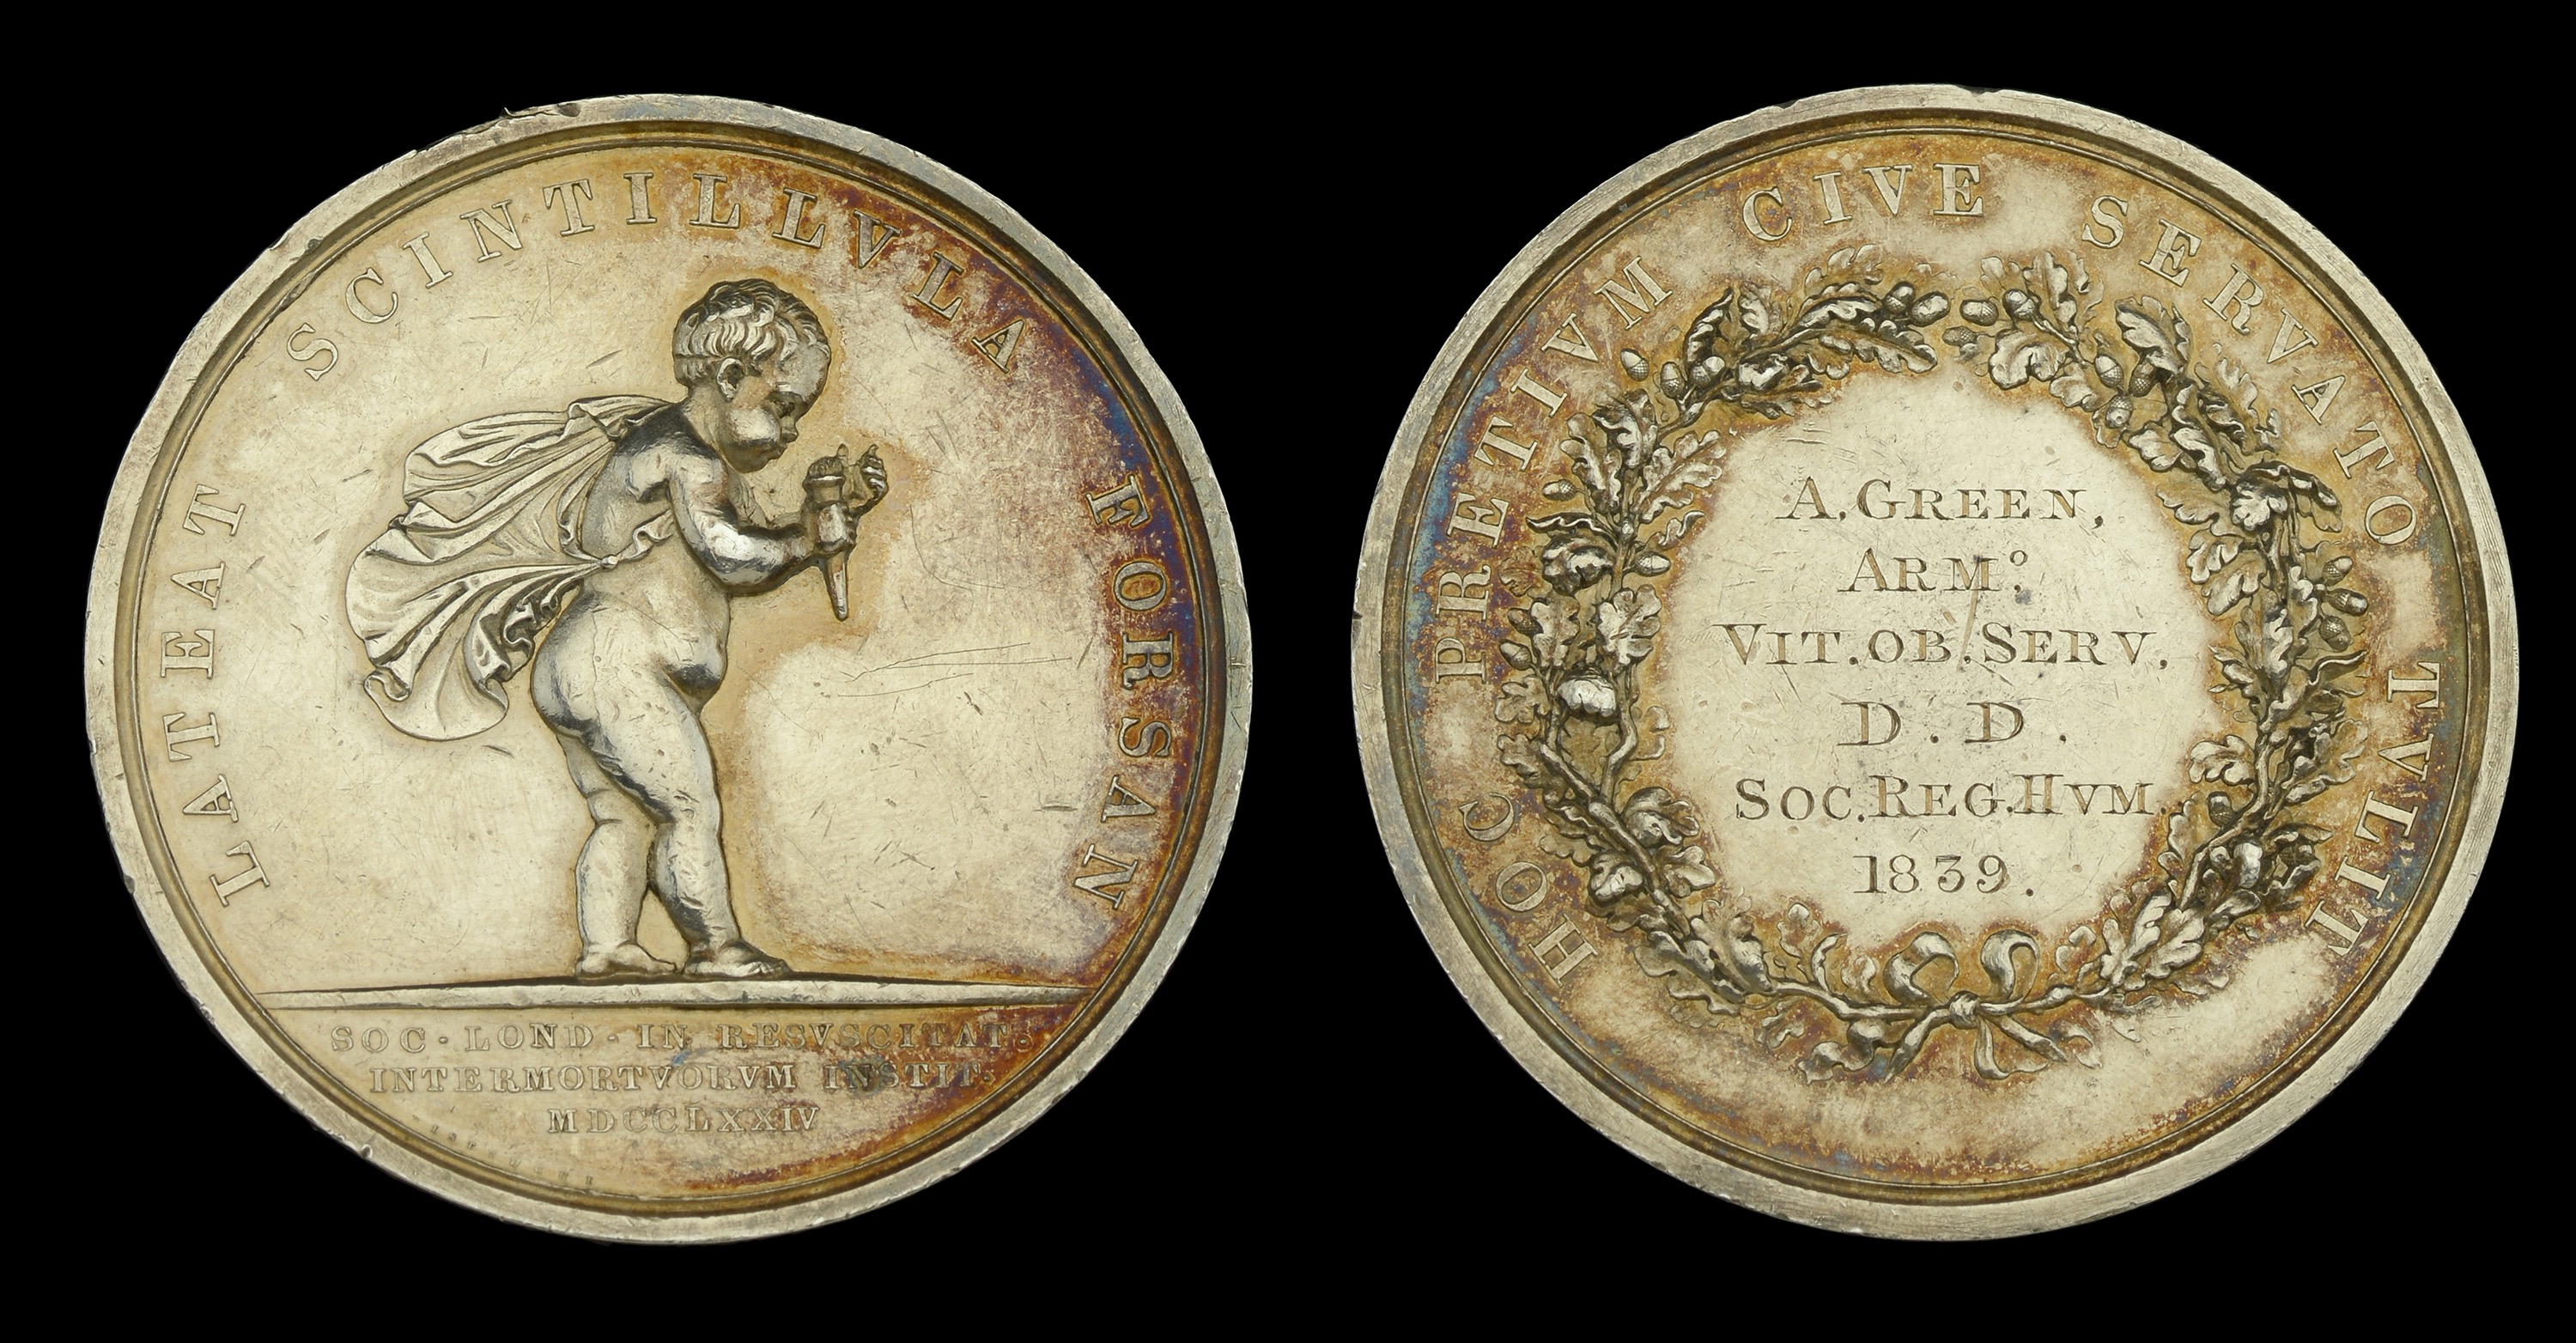 Royal Humane Society, large silver medal (successful) (A. Green, Vit. Ob. Serv. D.D. Soc. Re...